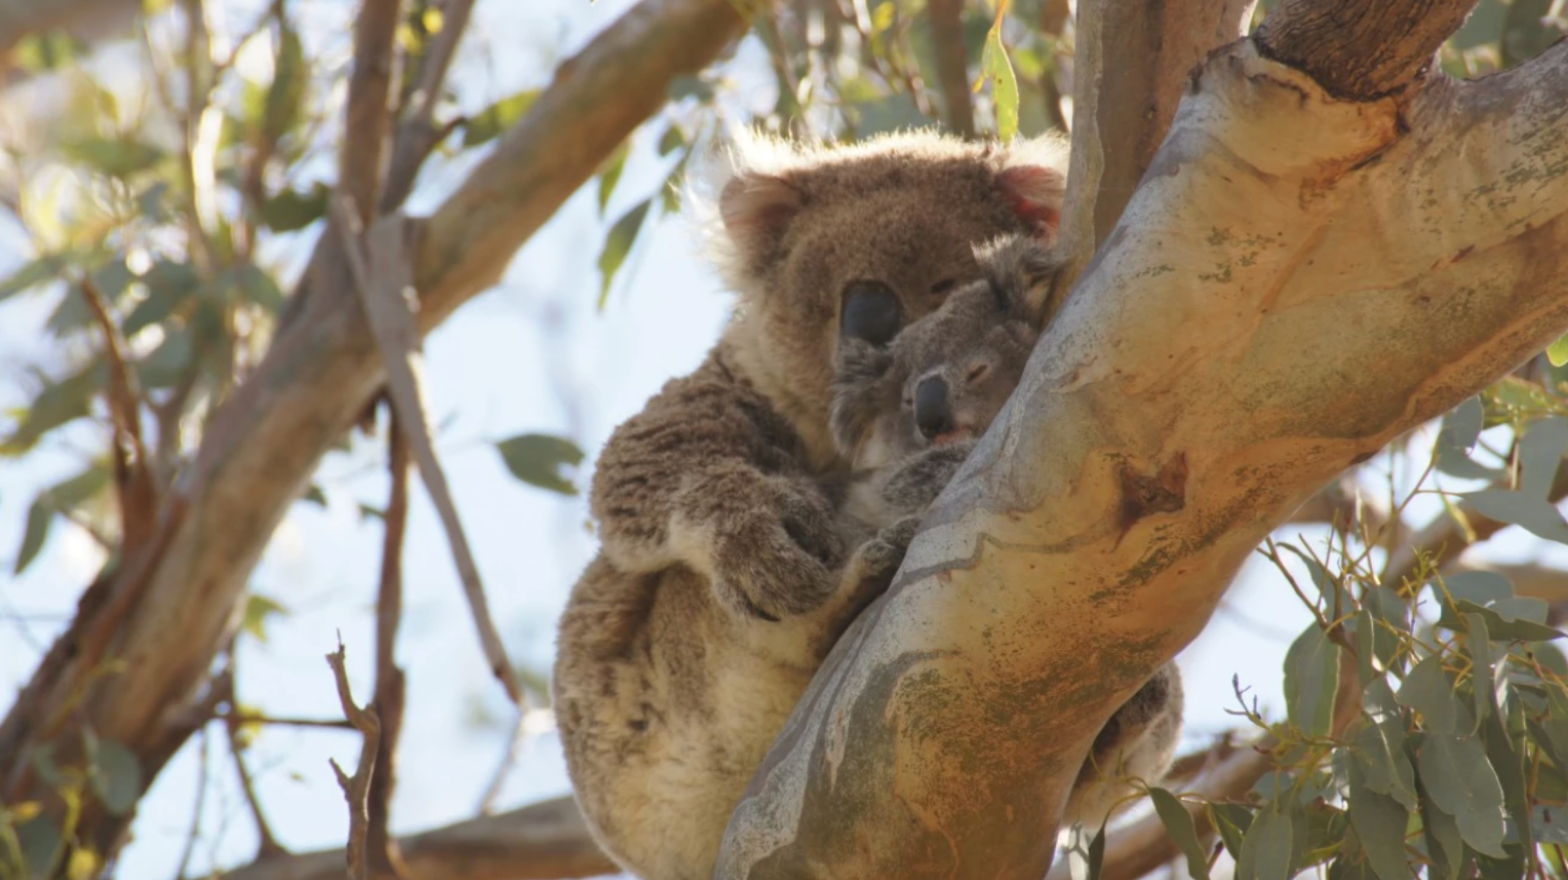 Save the koalas